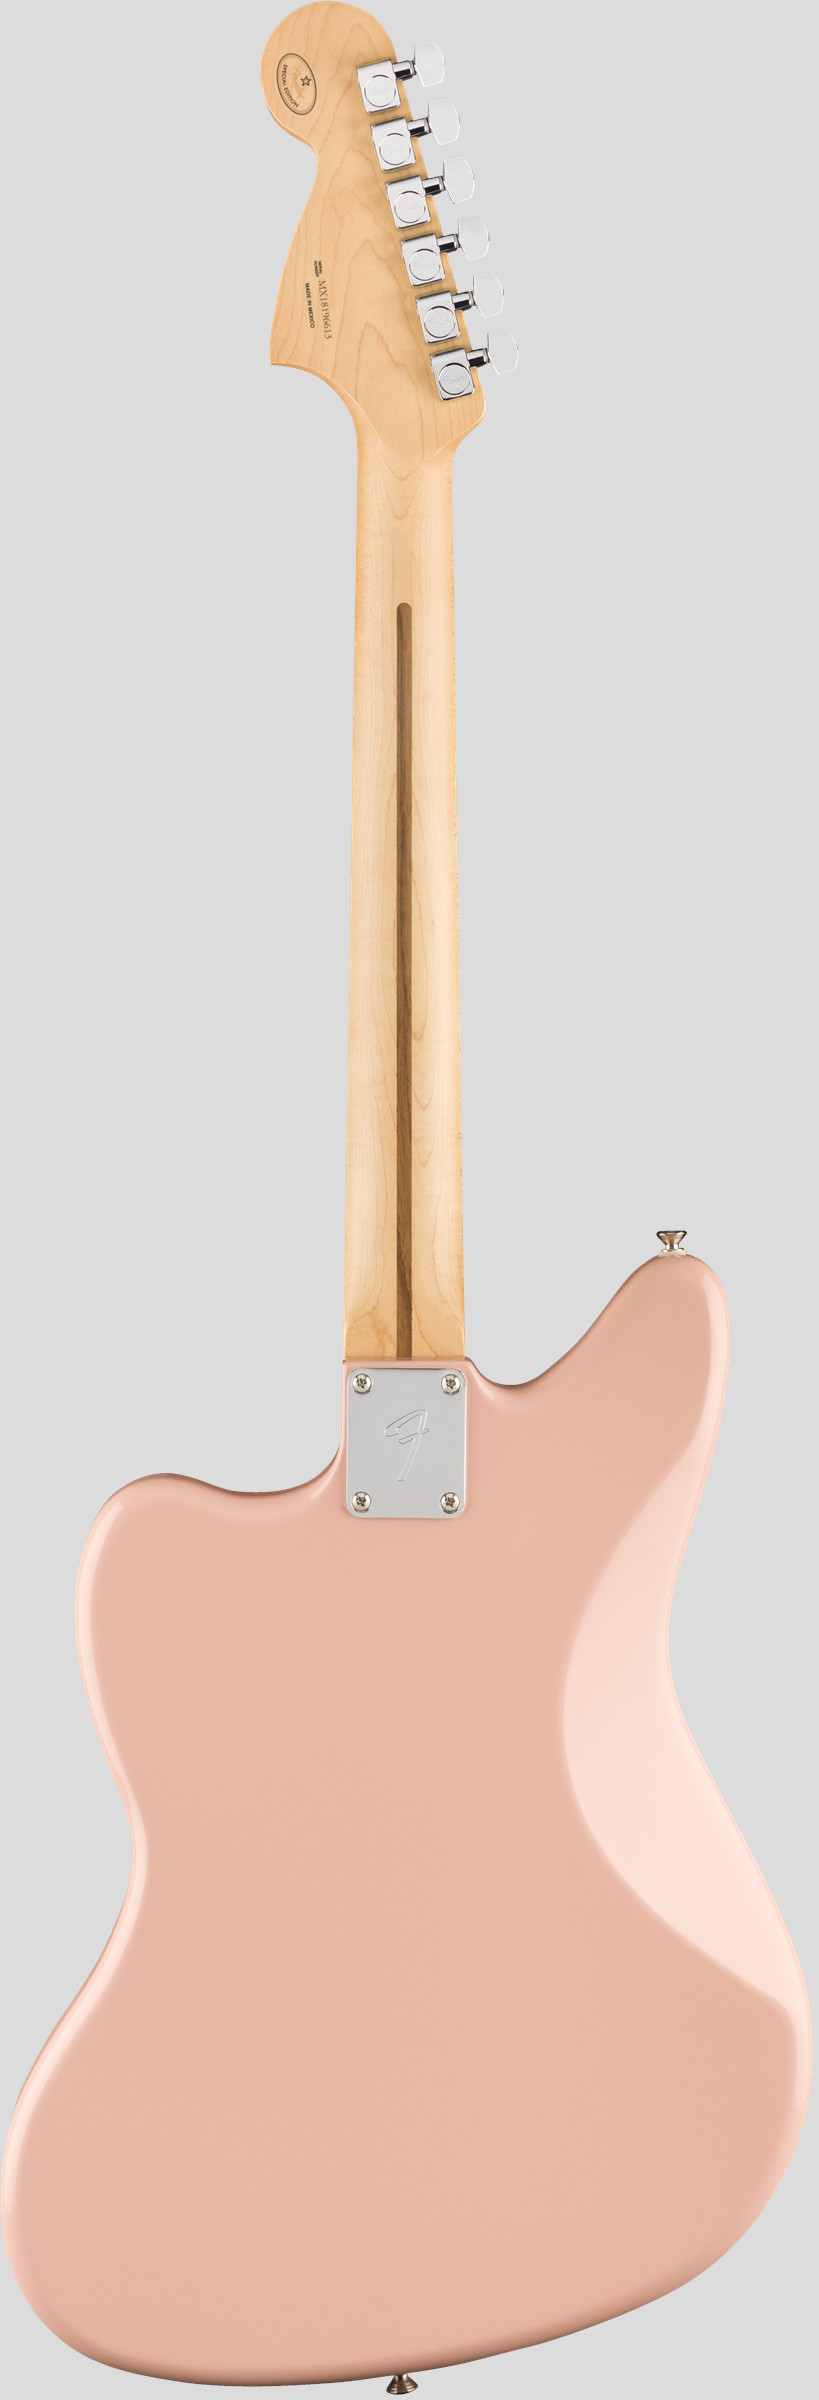 Fender Limited Edition Player Jaguar Shell Pink 2